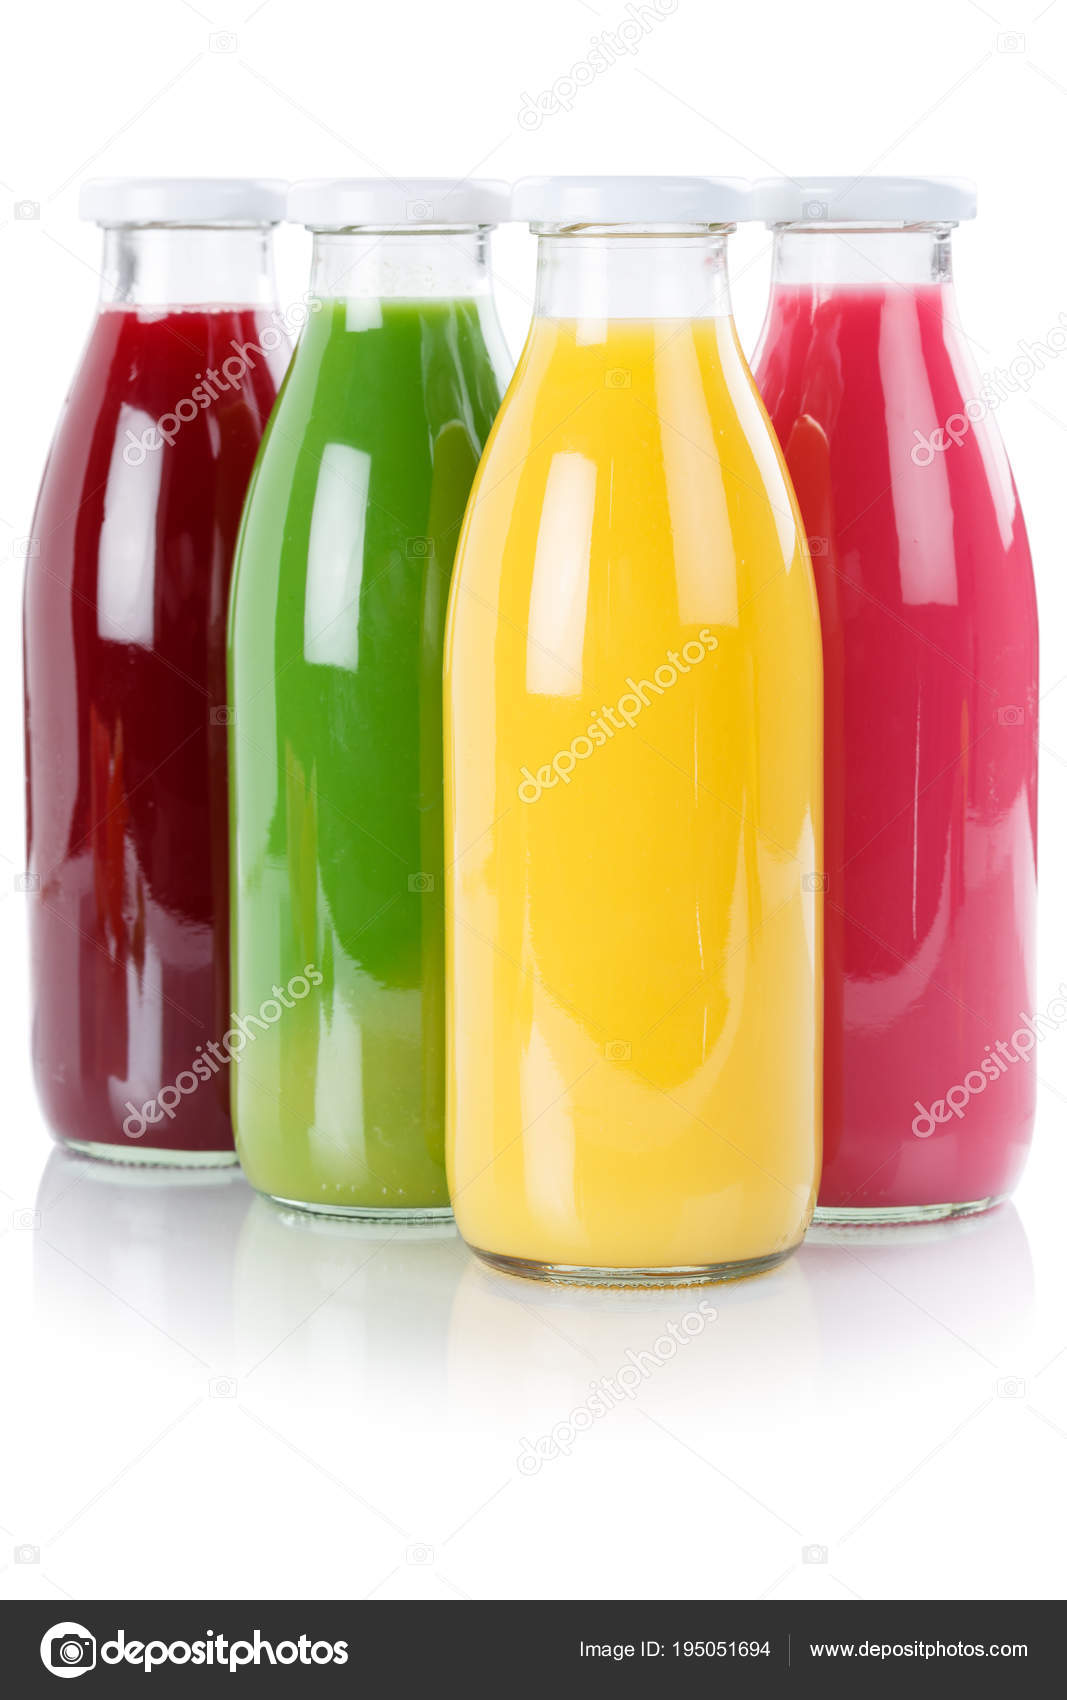 https://st3.depositphotos.com/1044737/19505/i/1600/depositphotos_195051694-stock-photo-juice-smoothie-fruit-smoothies-in.jpg